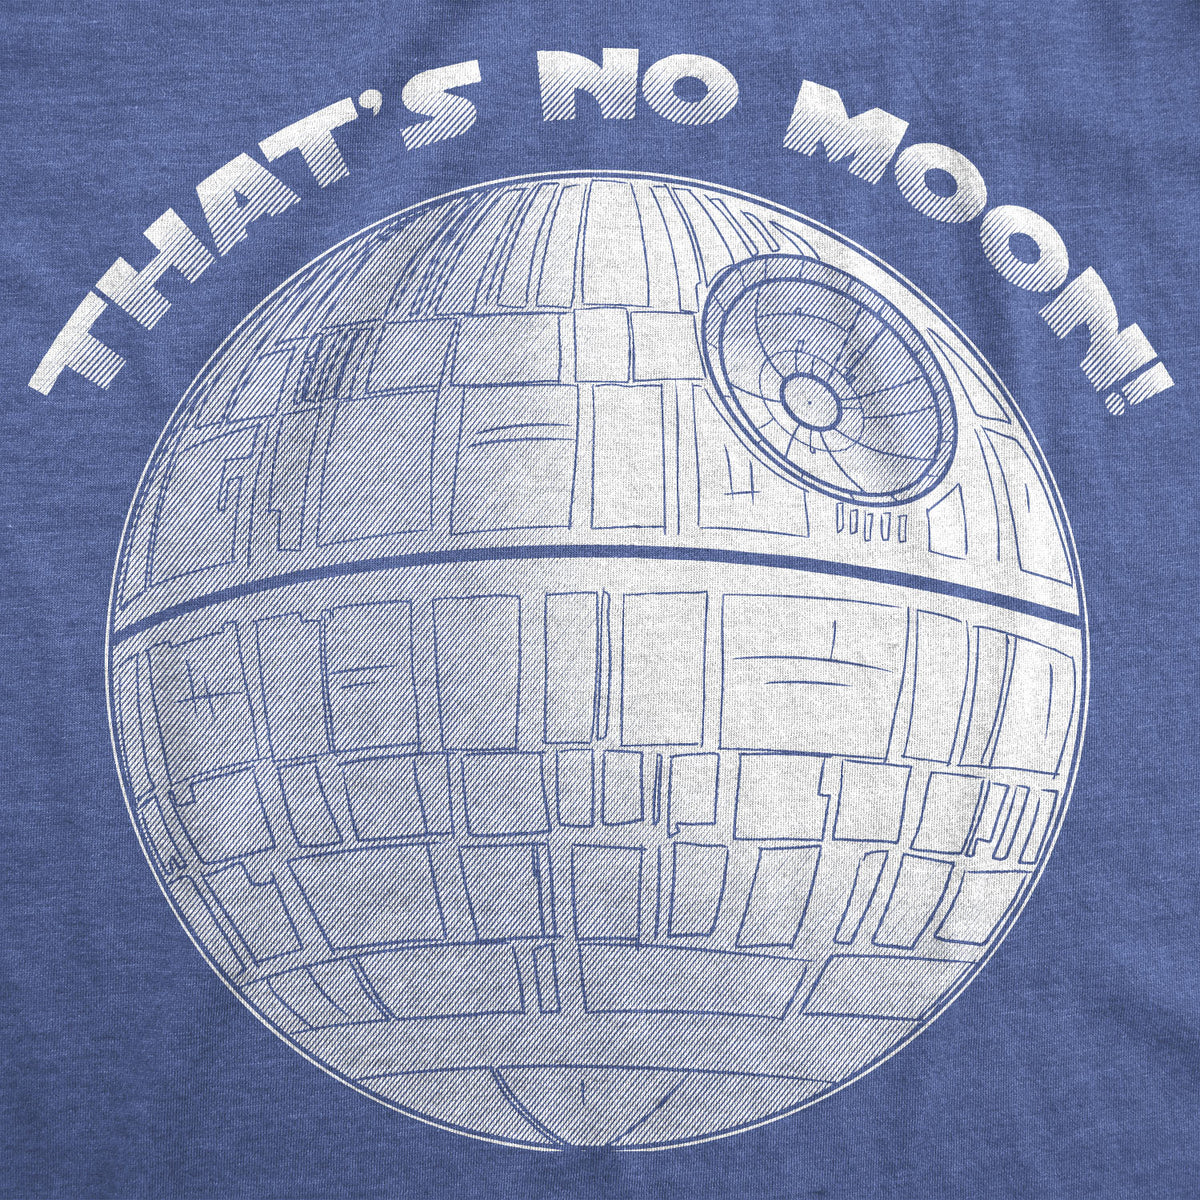 That&#39;s No Moon Maternity T Shirt